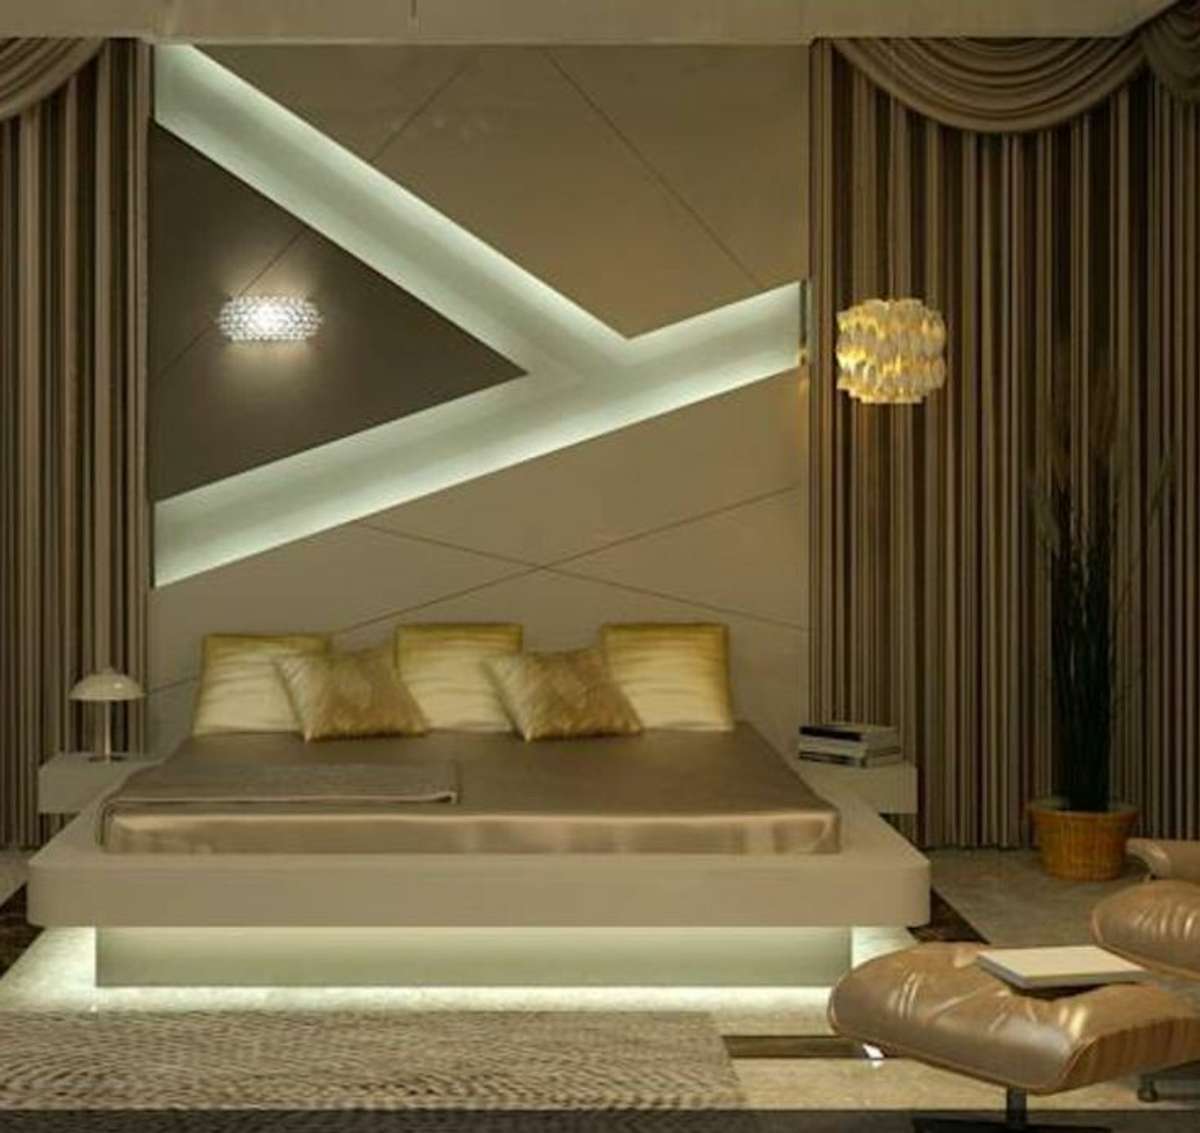 Furniture, Bedroom, Ceiling, Lighting, Storage Designs by Contractor Culture Interior, Delhi | Kolo